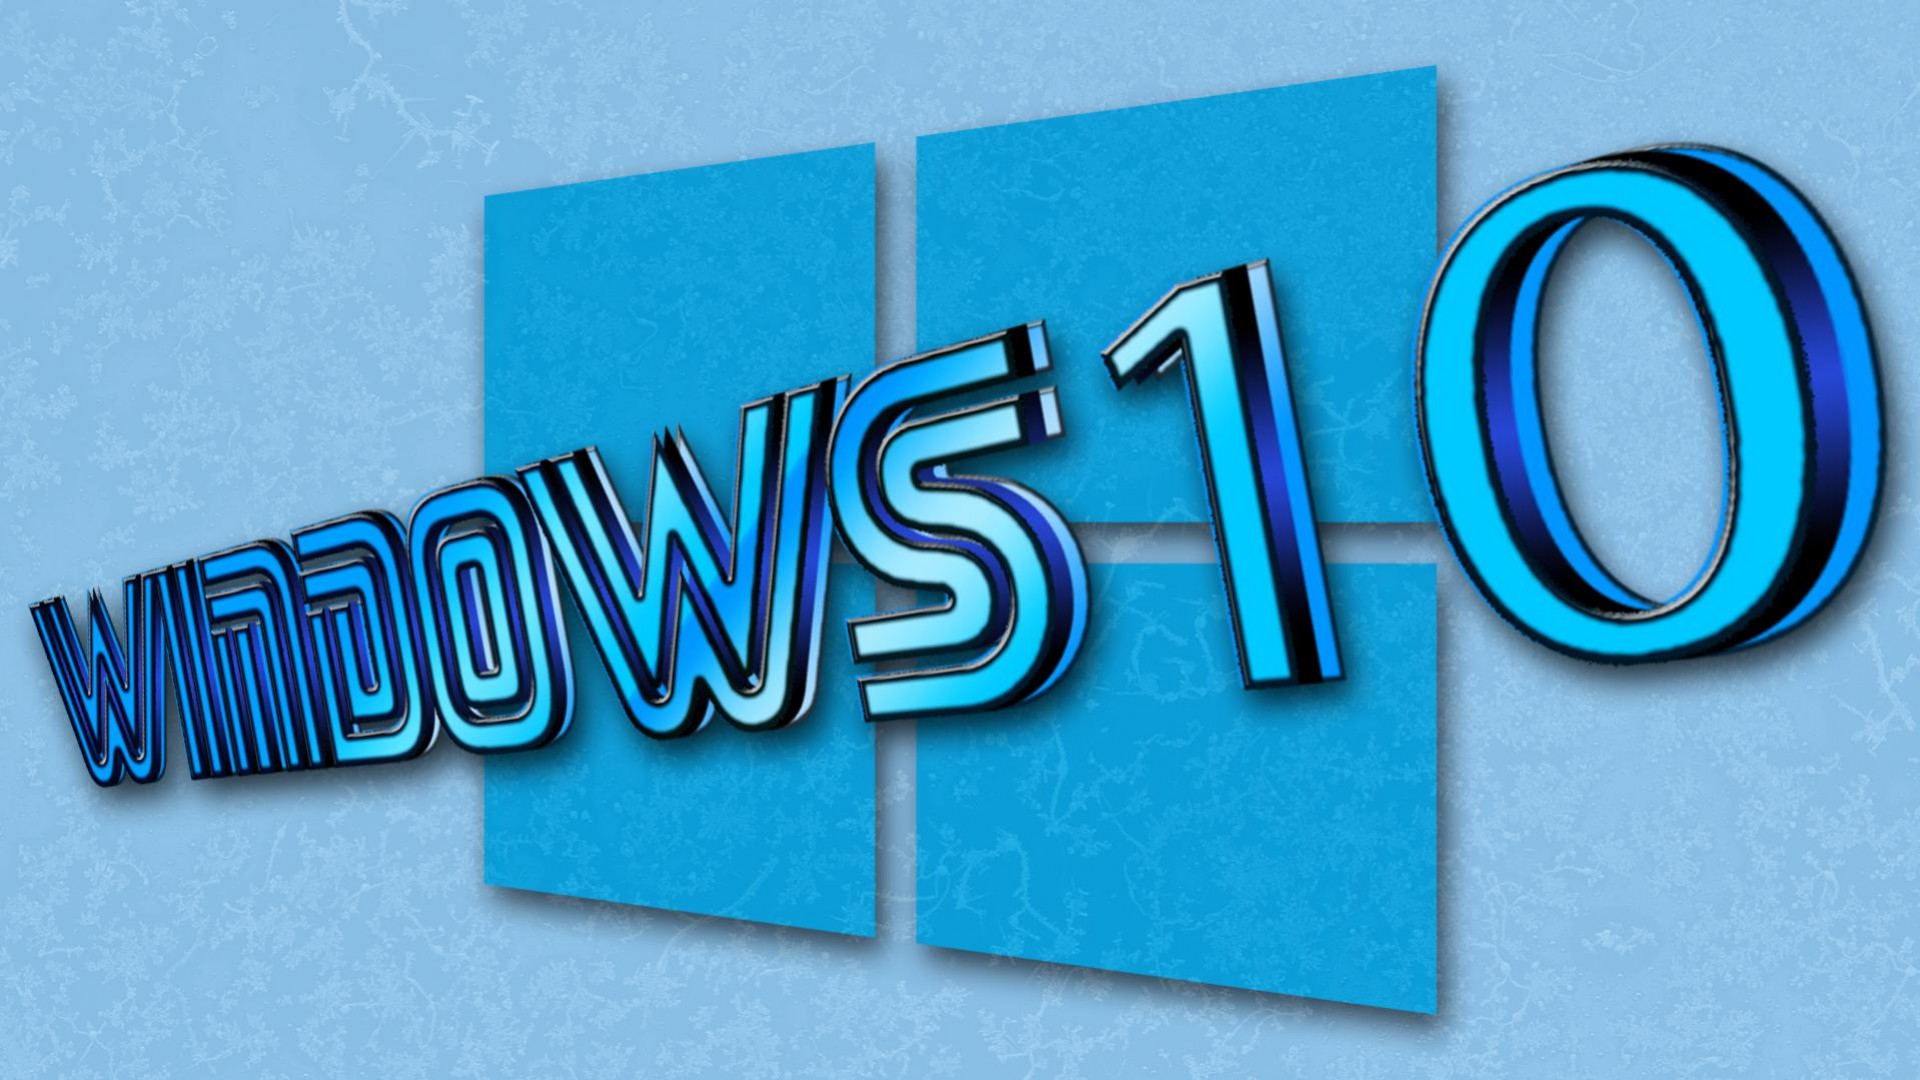 Windows 10 Logo wallpaper 1920x1080 1080p   Wallpaper   Wallpaper